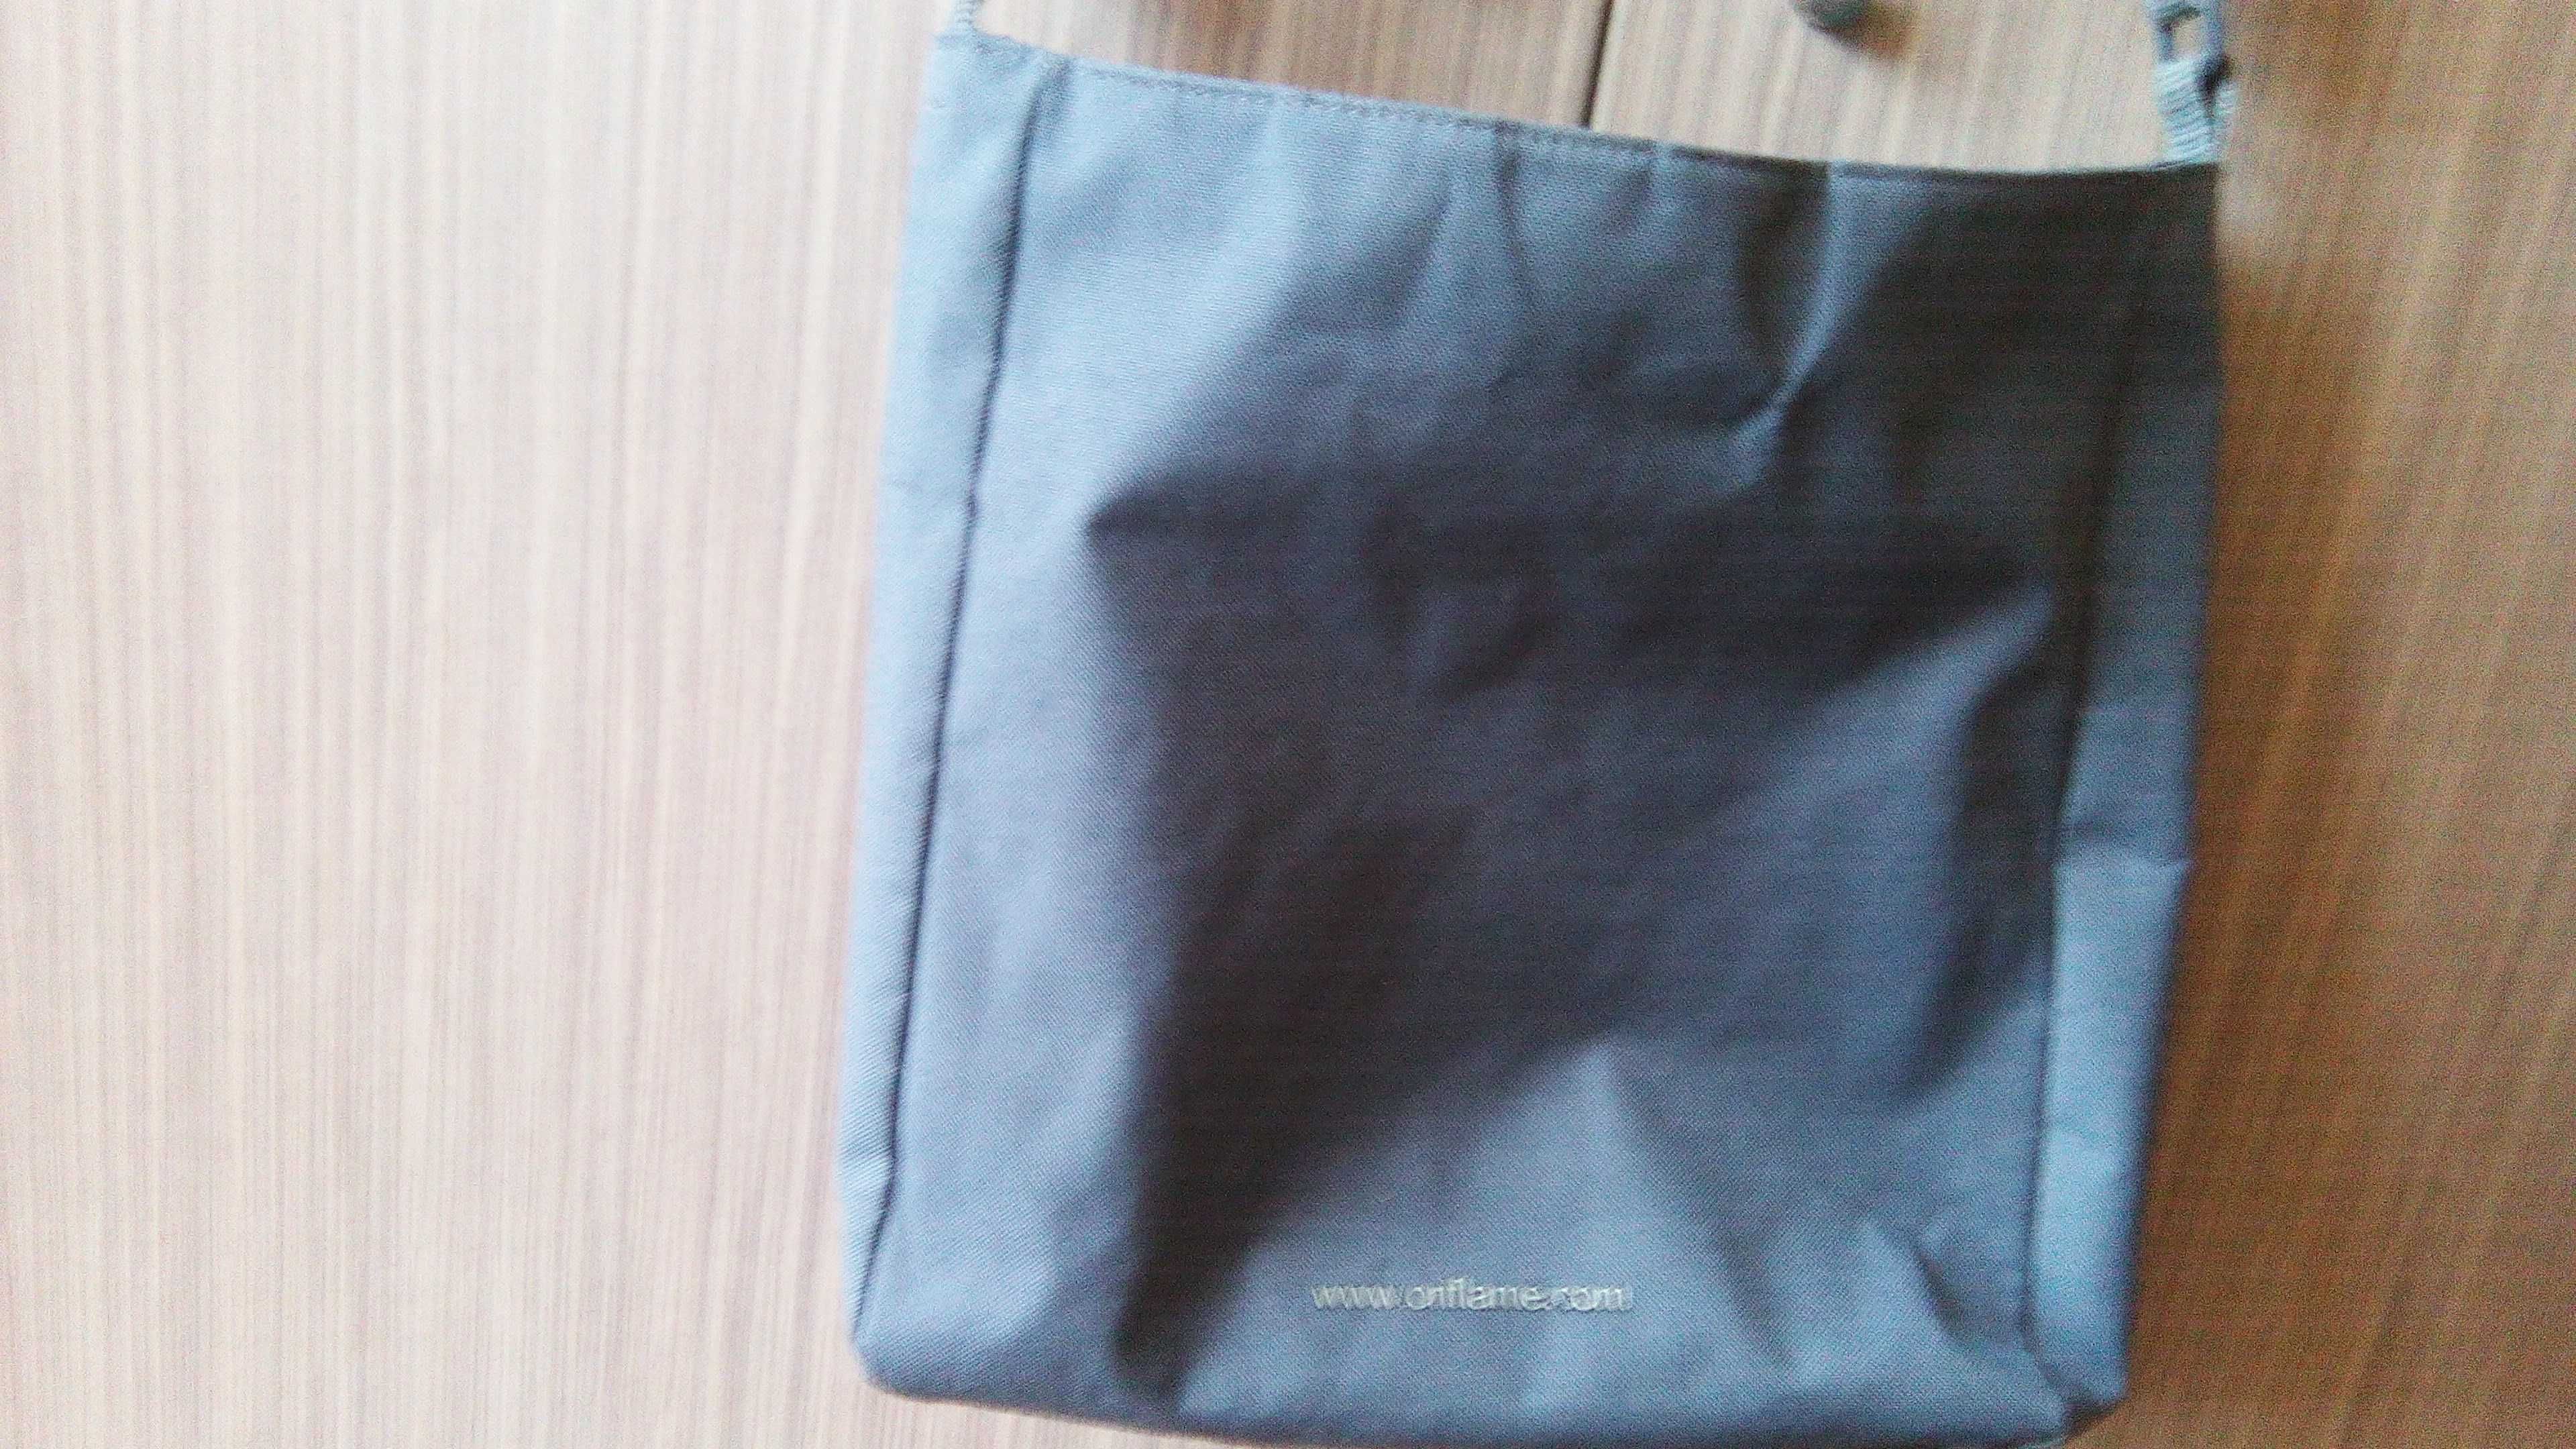 Чанта About you и Нова бежова чанта с принт + подарък чанта Орифлейм